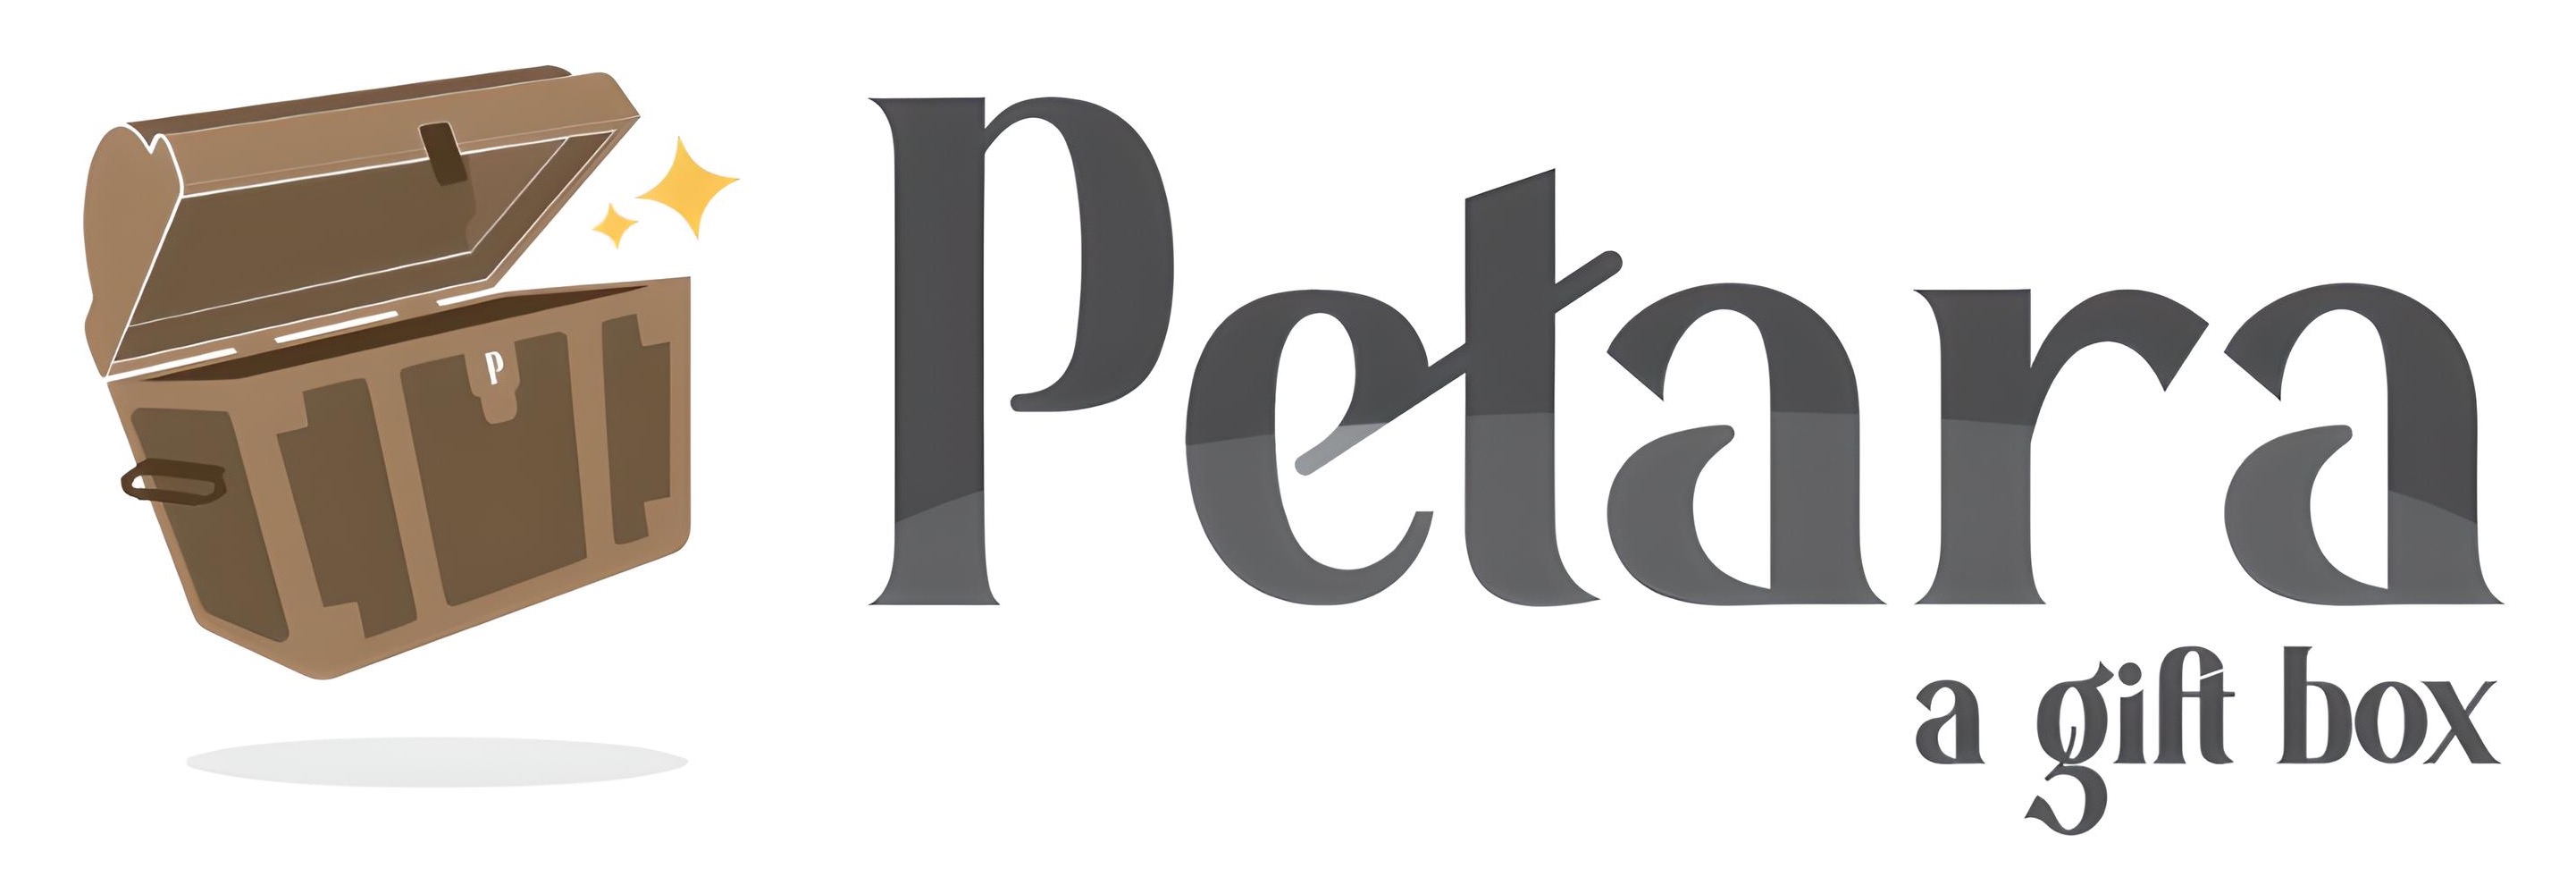 Petara Corporation Logo